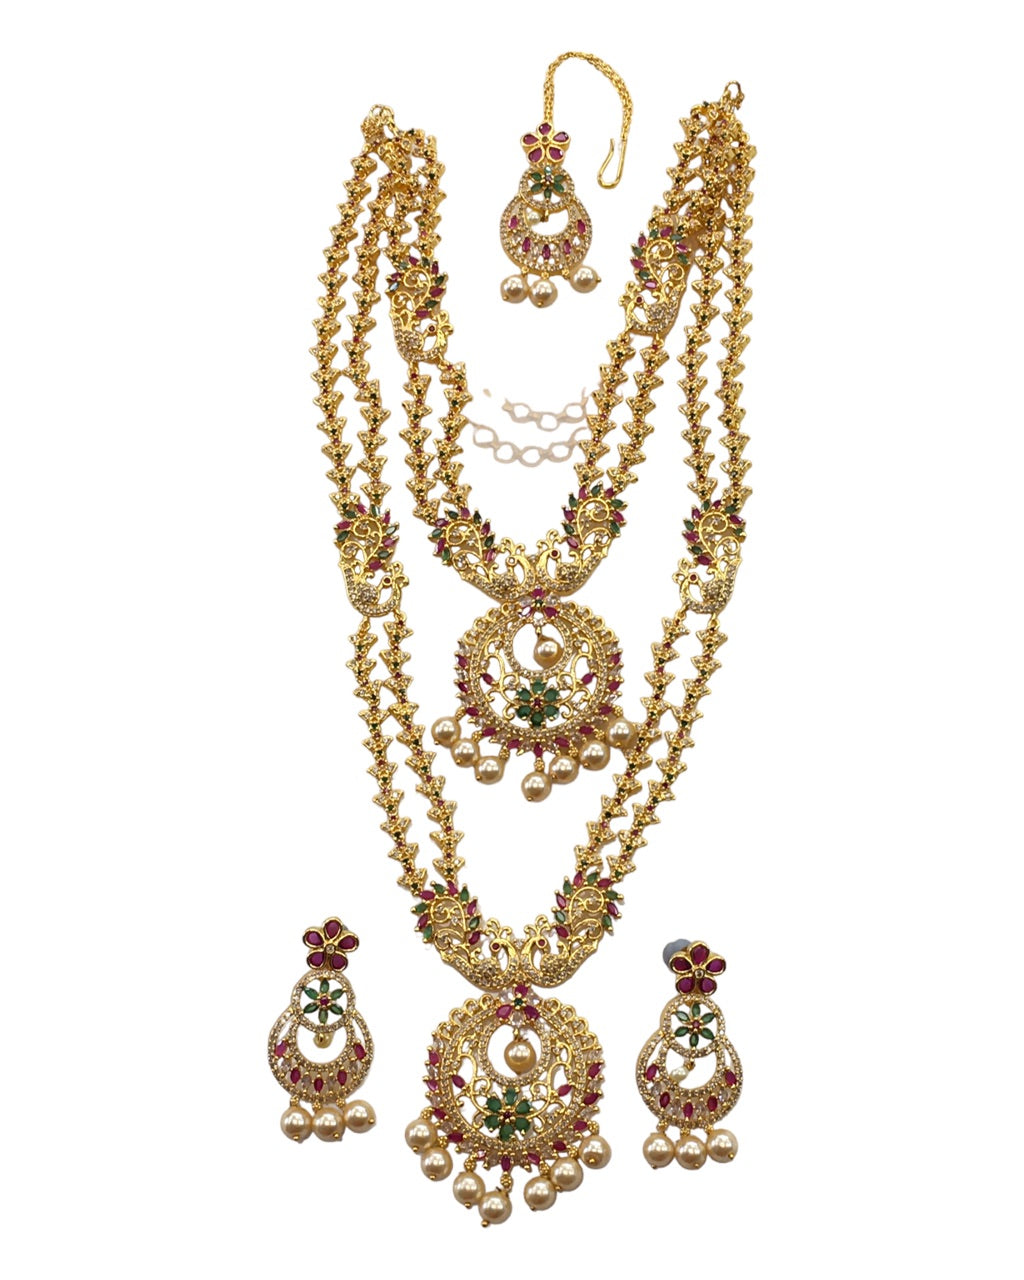 Multi - Gold Finish Double Necklace set - Bollywood - Weddings - MSK12 VC 0523